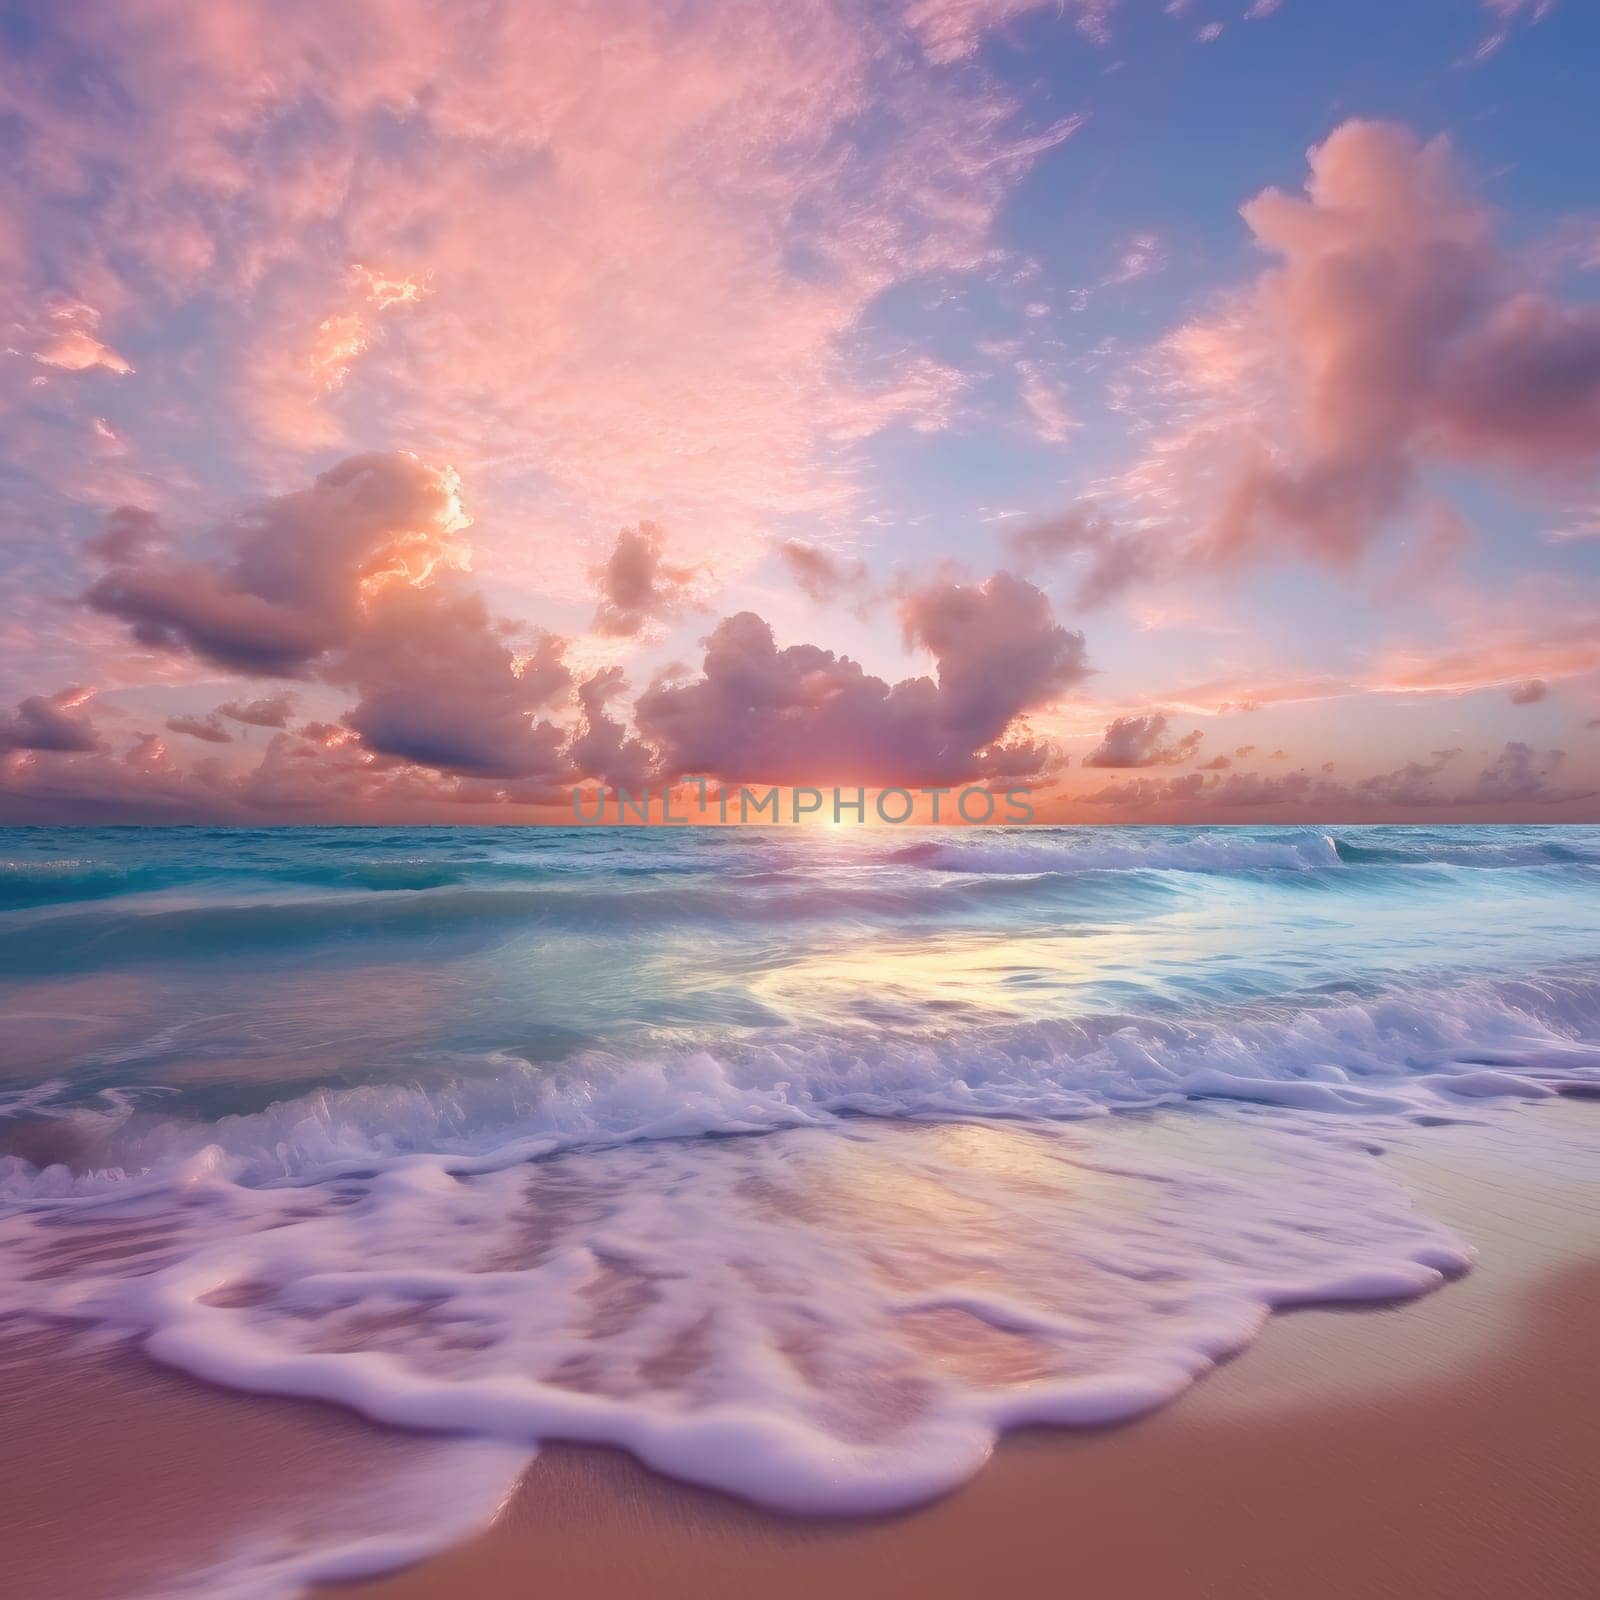 Sandy beach of the sea, sea foam, clouds and a beautiful sunset. Pink tone